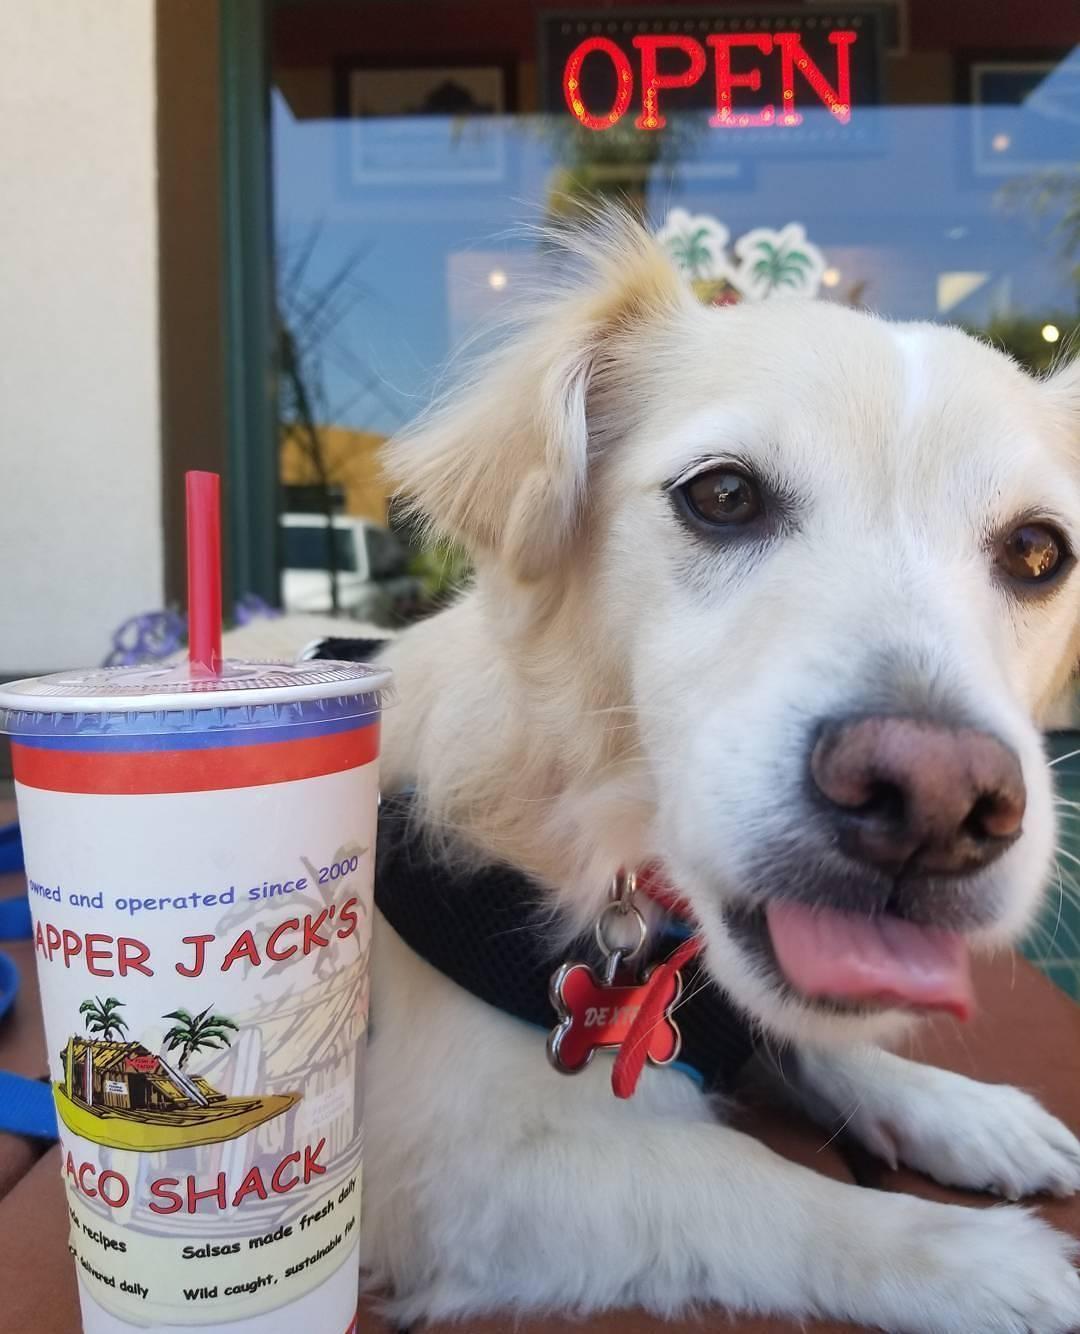 Pet Friendly Snapper Jack's Taco Shack